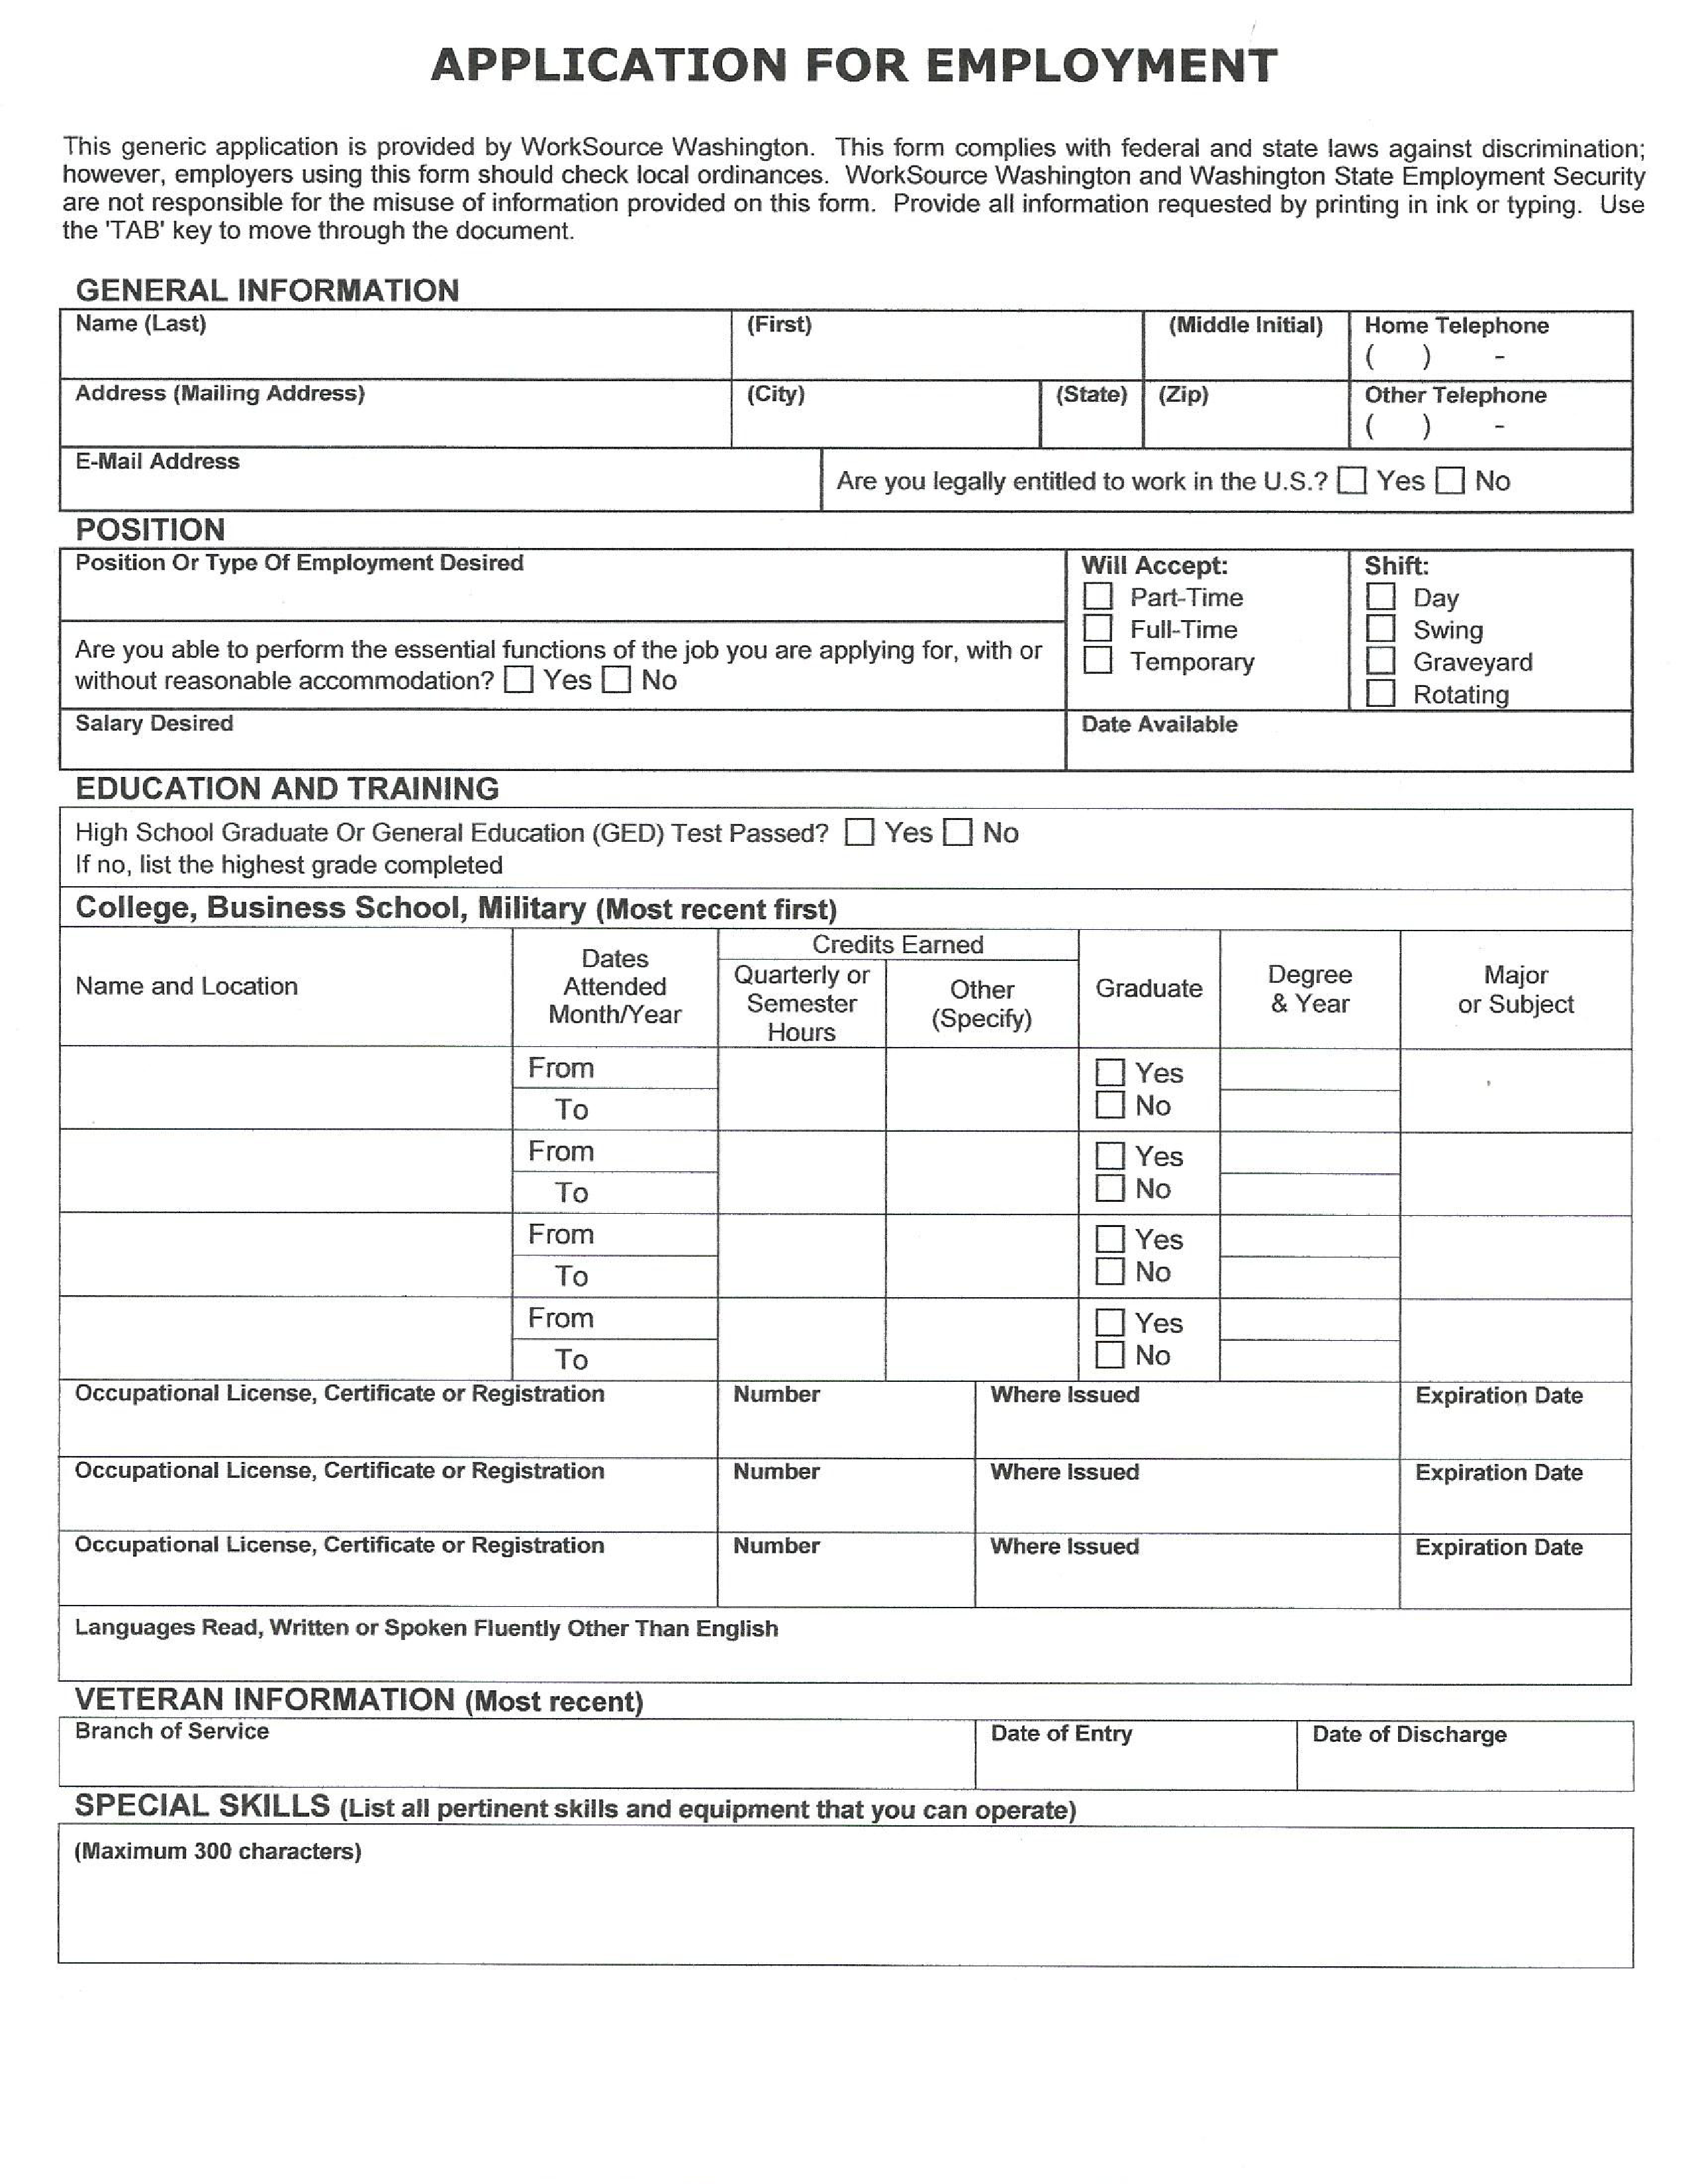 General job application form template